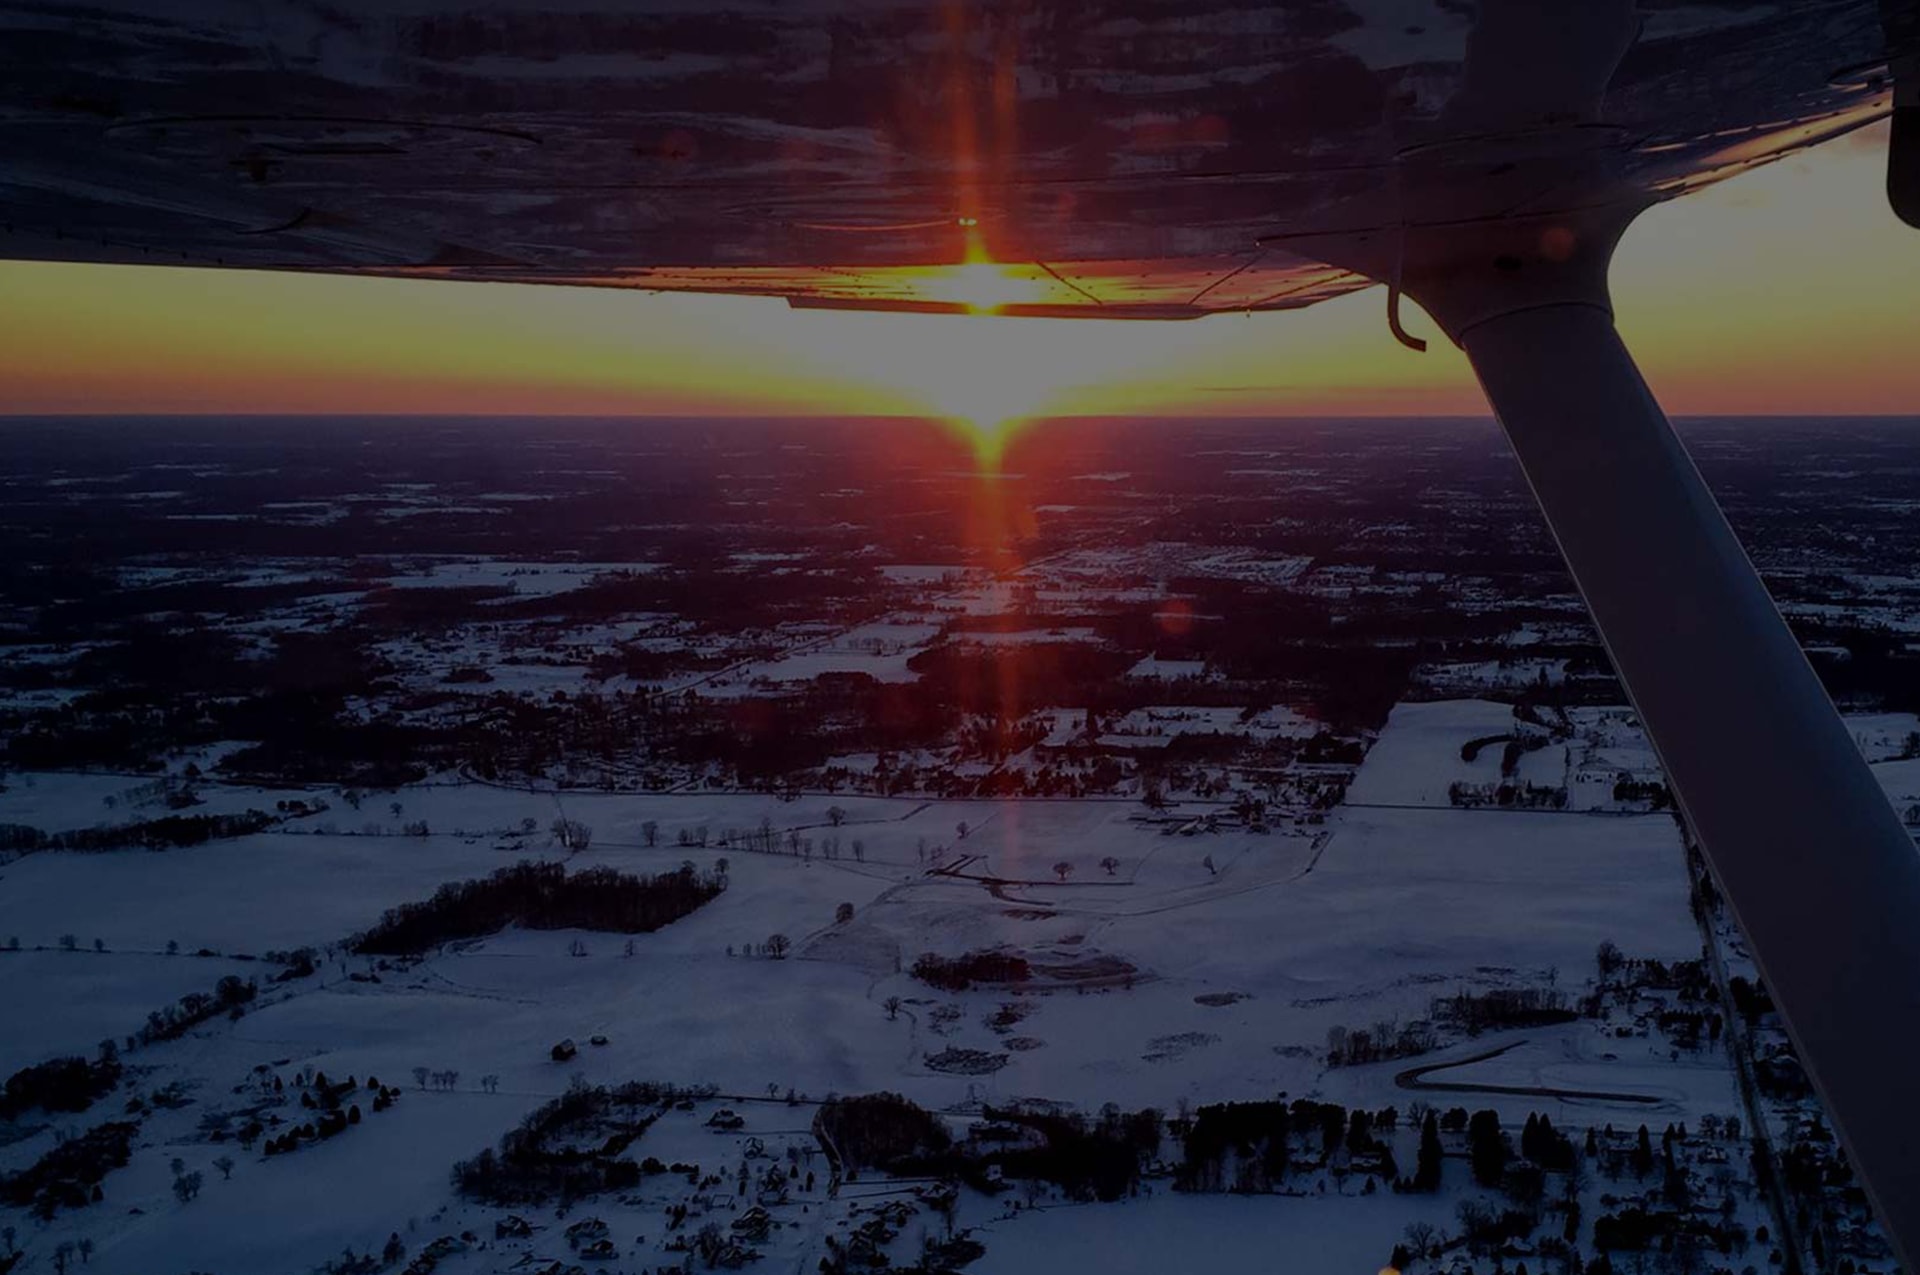 Greater Flint Pilots Association Flying Club Beaver Island Winter Sunset